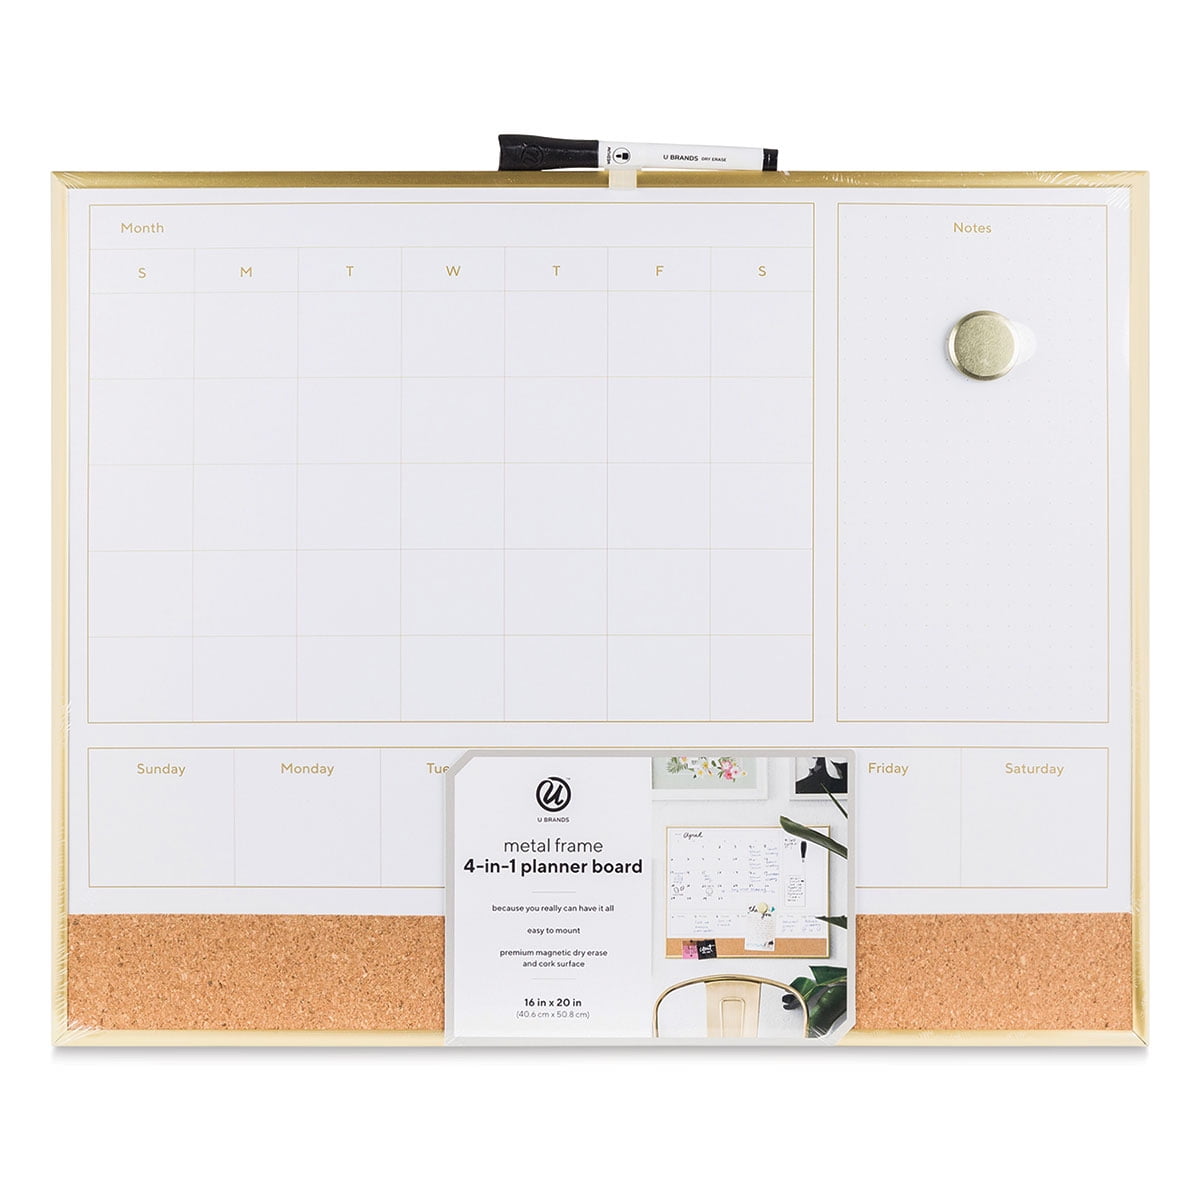 U Brands 12''x16'' Arch Gold Frame Dry Erase Board With Cork Strip : Target